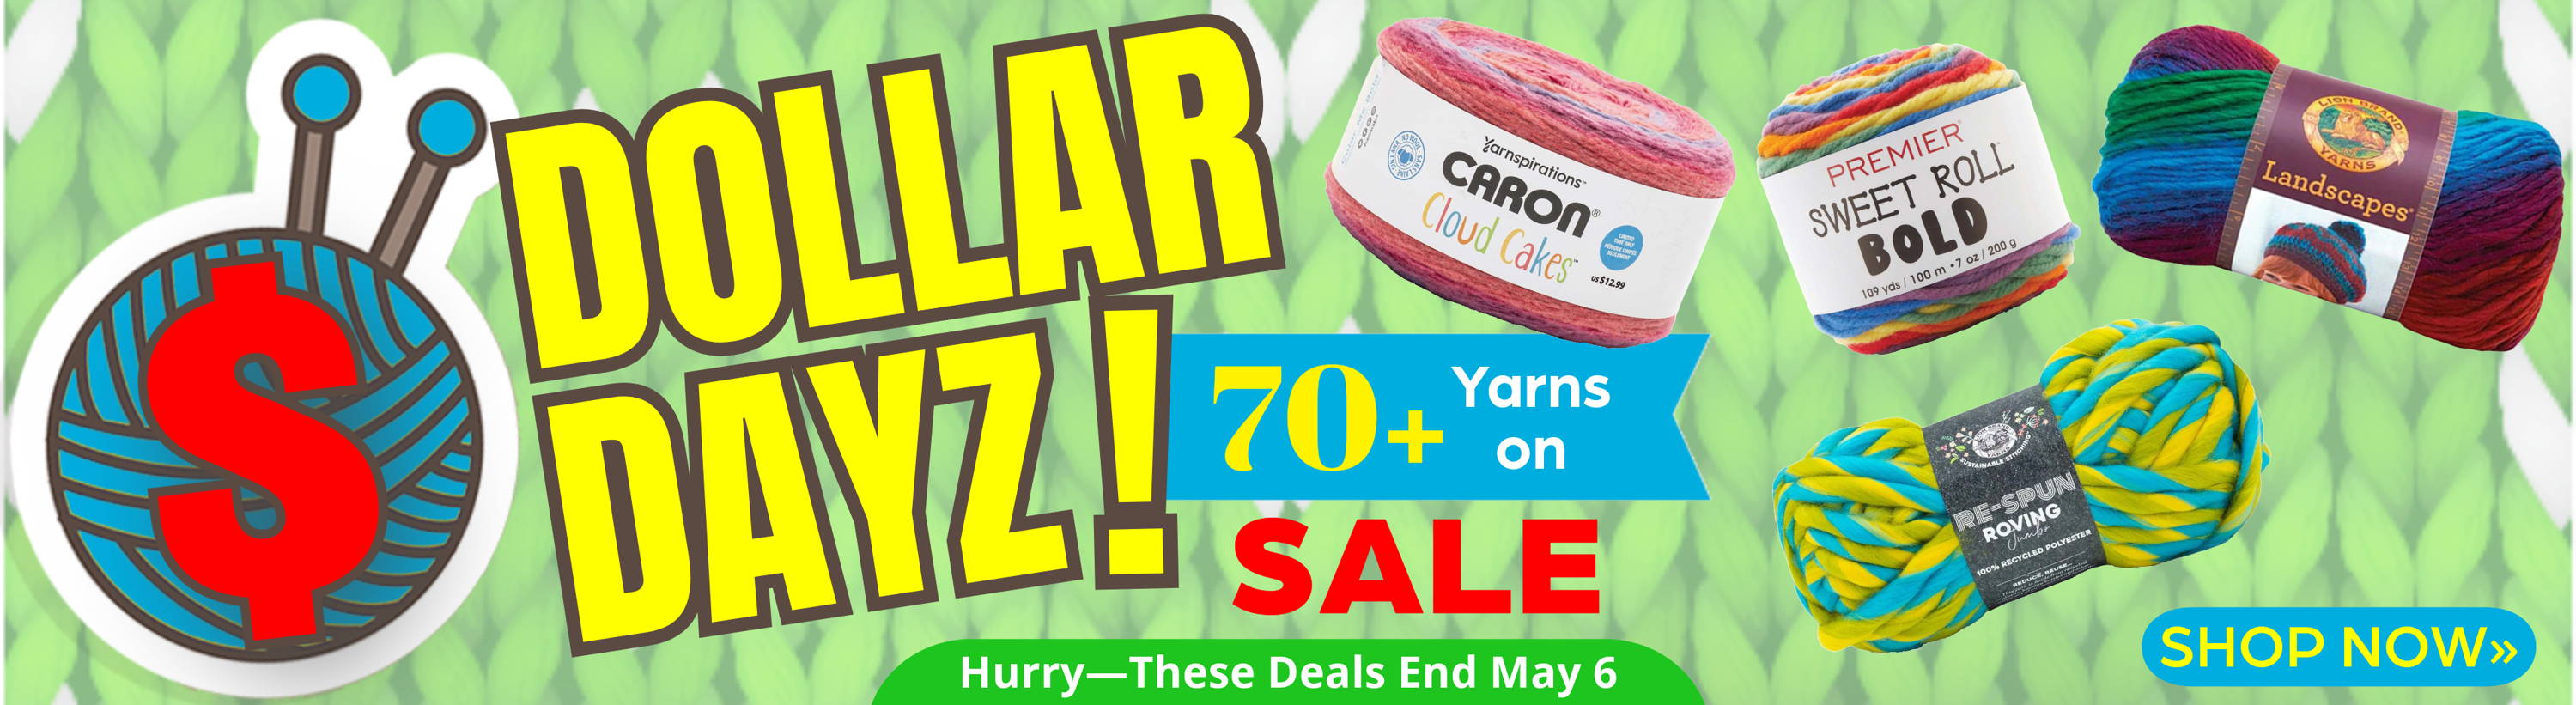 Dollar Dayz Sale! 70+ Yarns on Sale until May 6. Image: Featured Yarns on Sale.